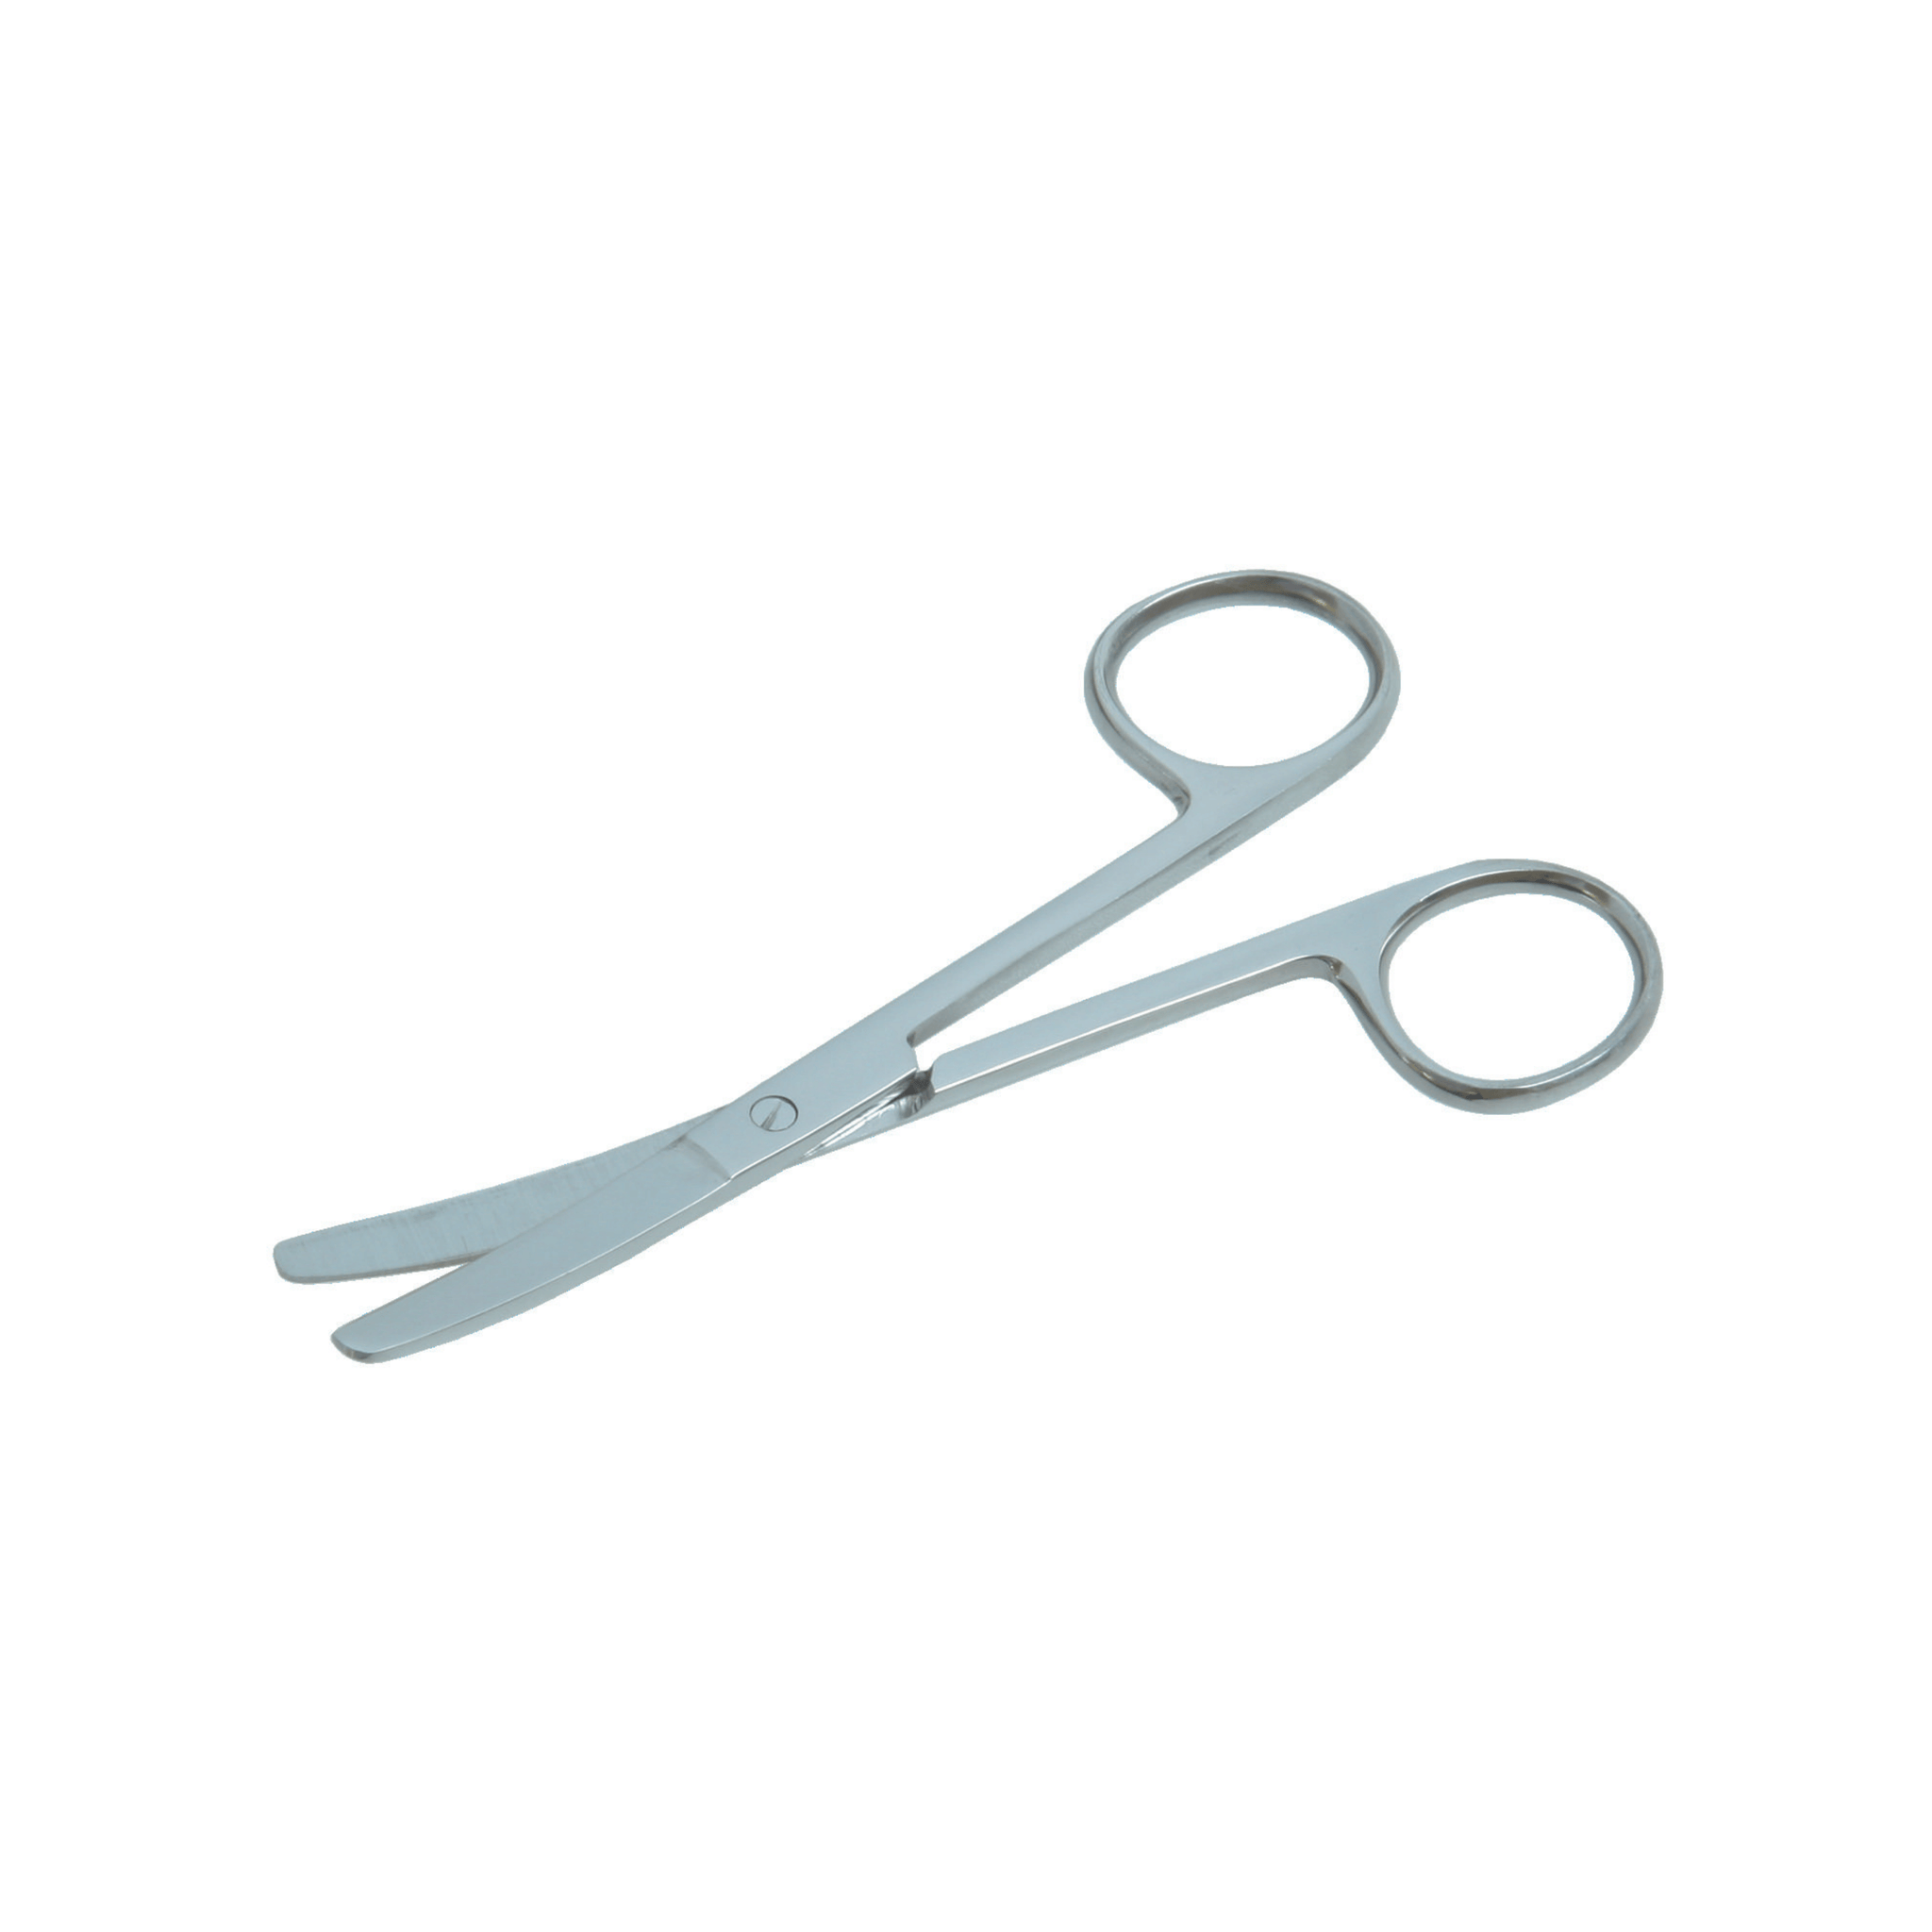 Surgical BL/BL Curved Scissors- 13 cm - 2